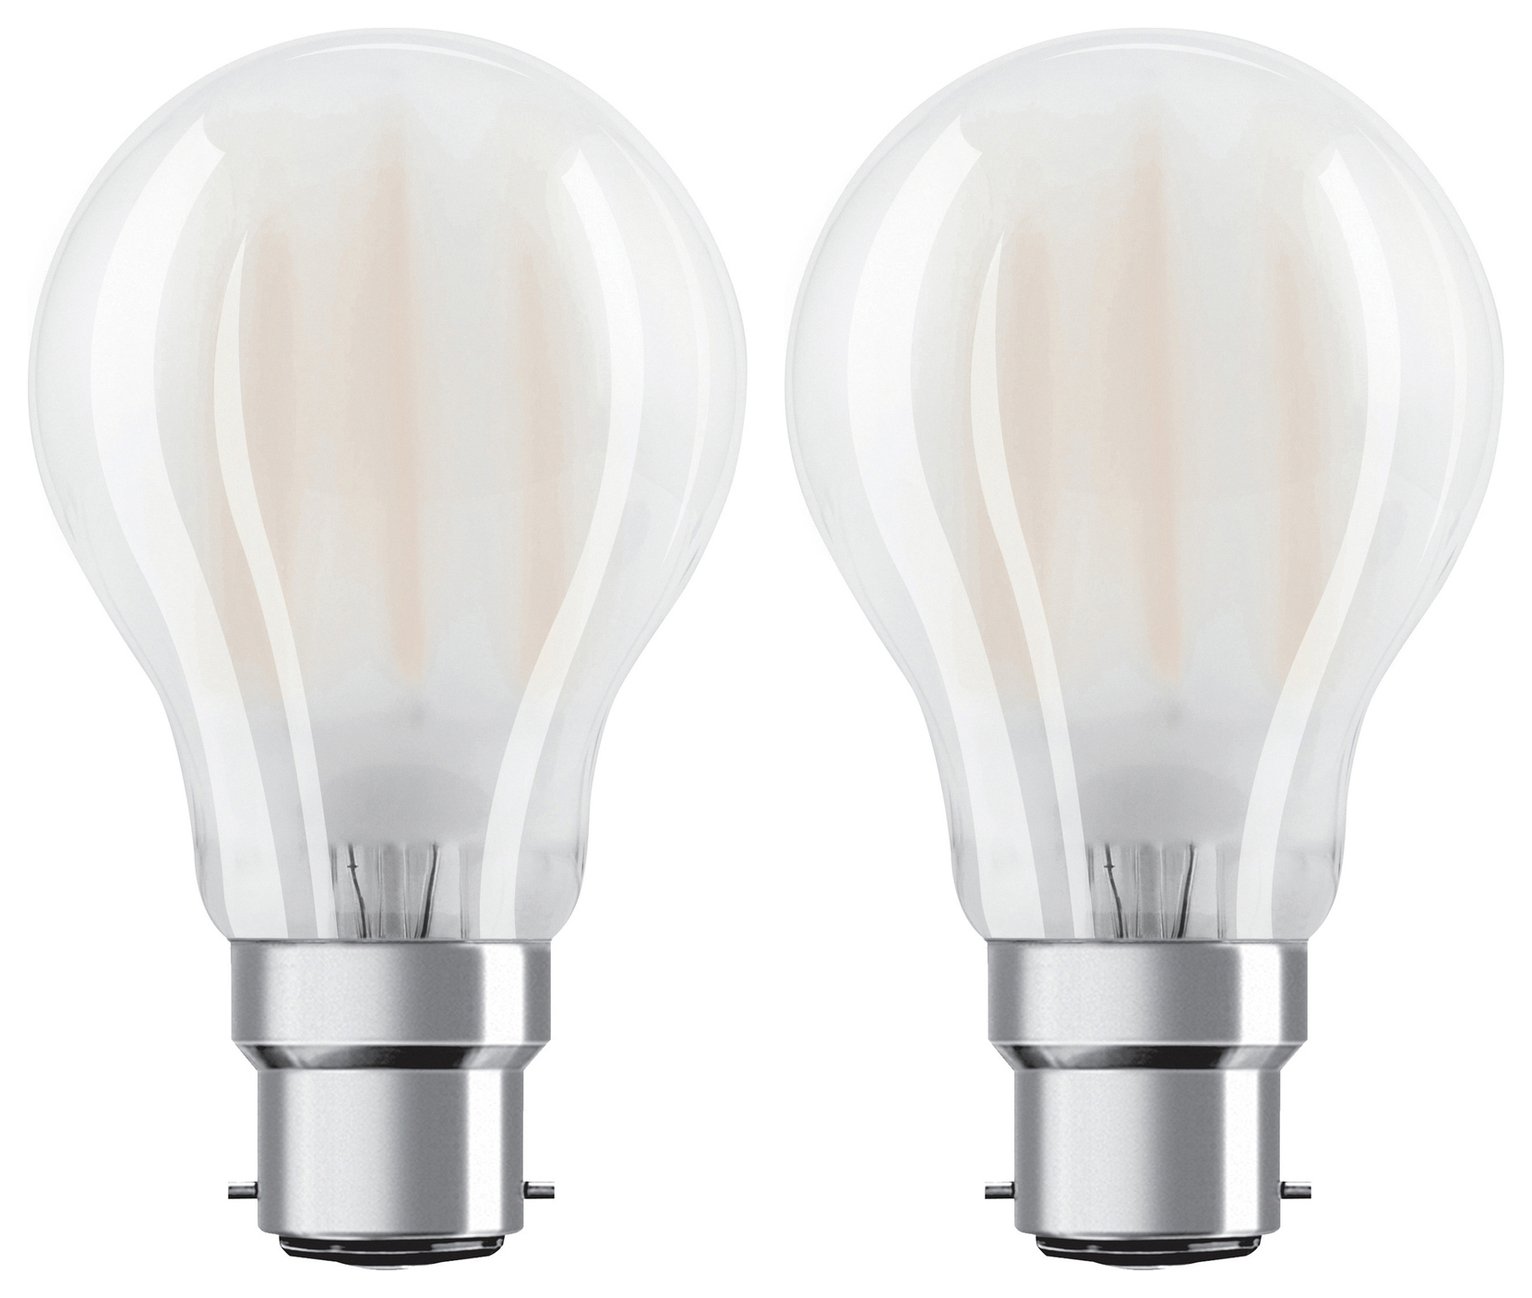 Osram bulb review